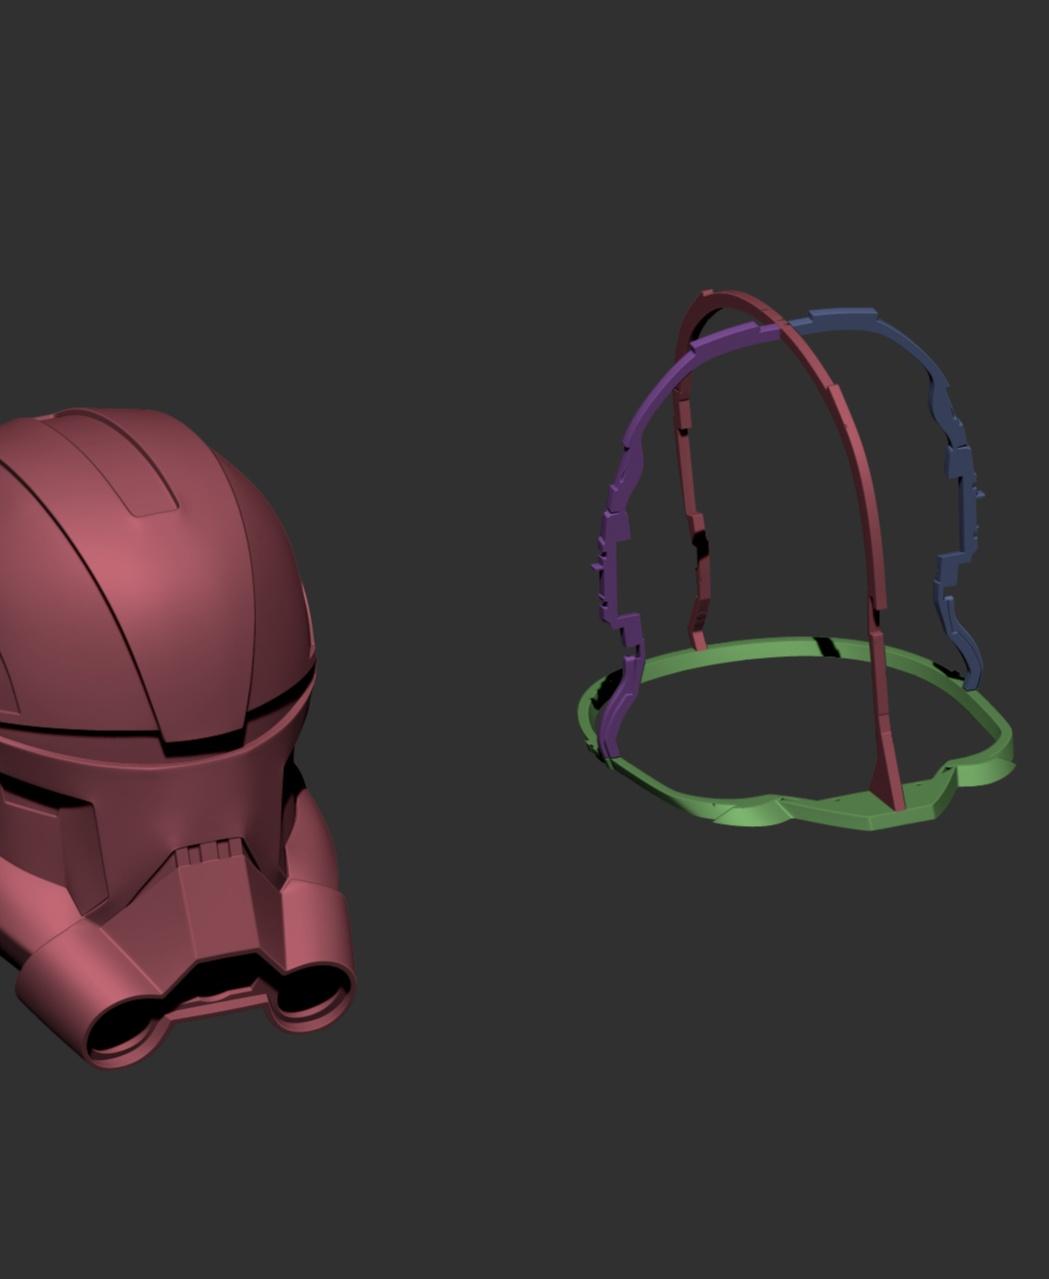 Echo helmet from Bad Batch 3d model